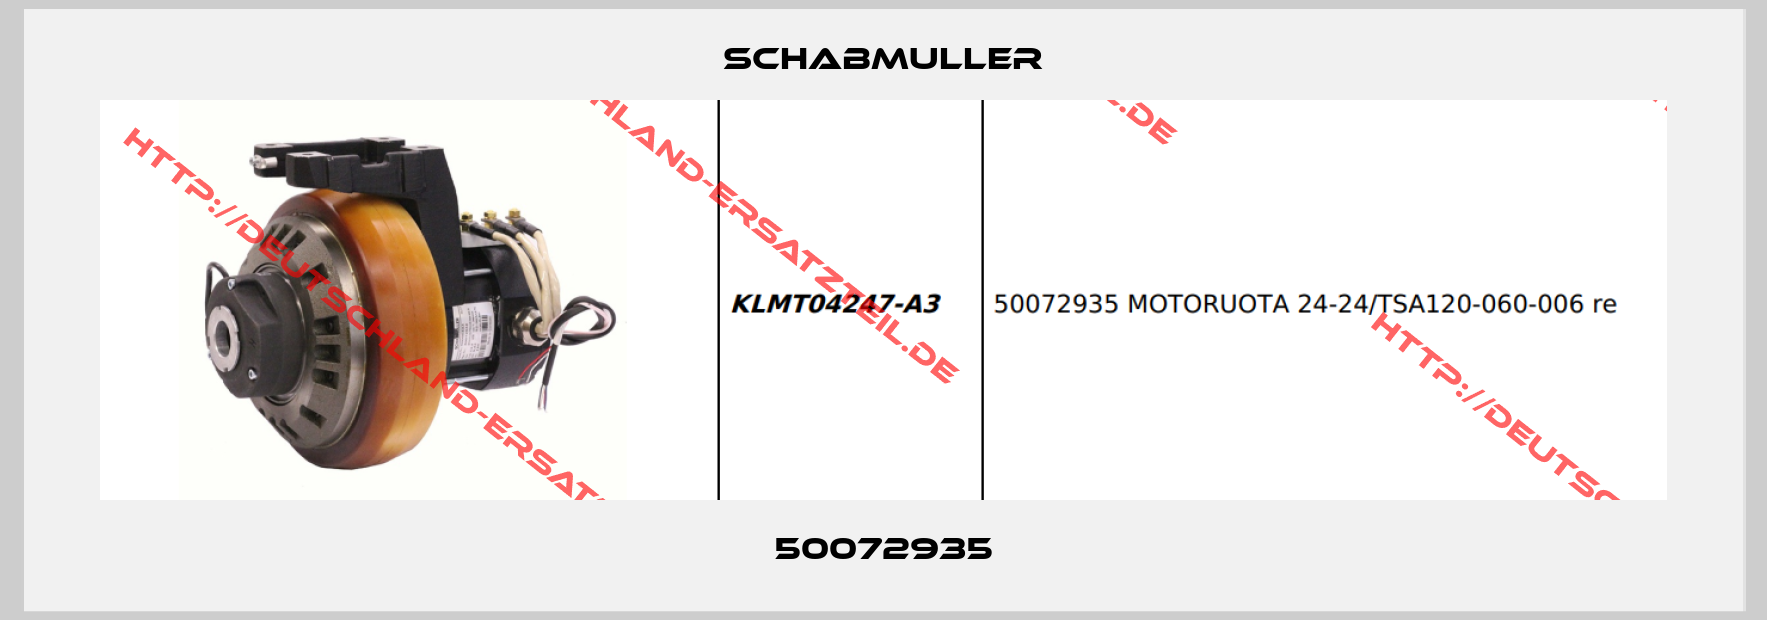 Schabmuller-50072935